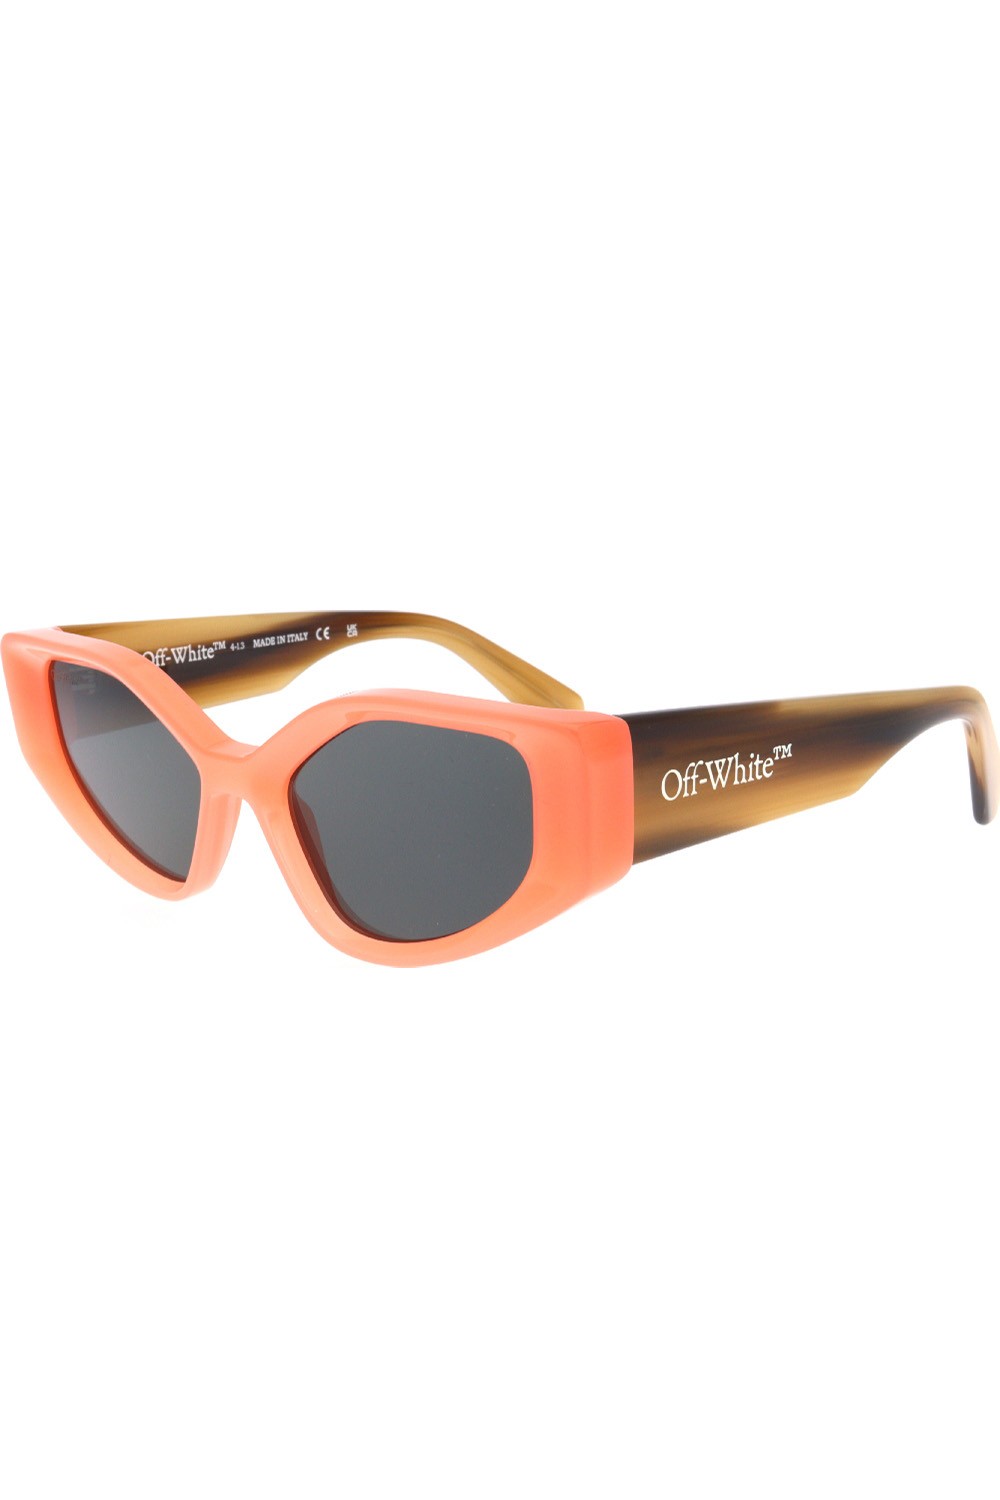 Off-White - Occhiali da sole in celluloide cat eye per donna rosa - OERI063 2107